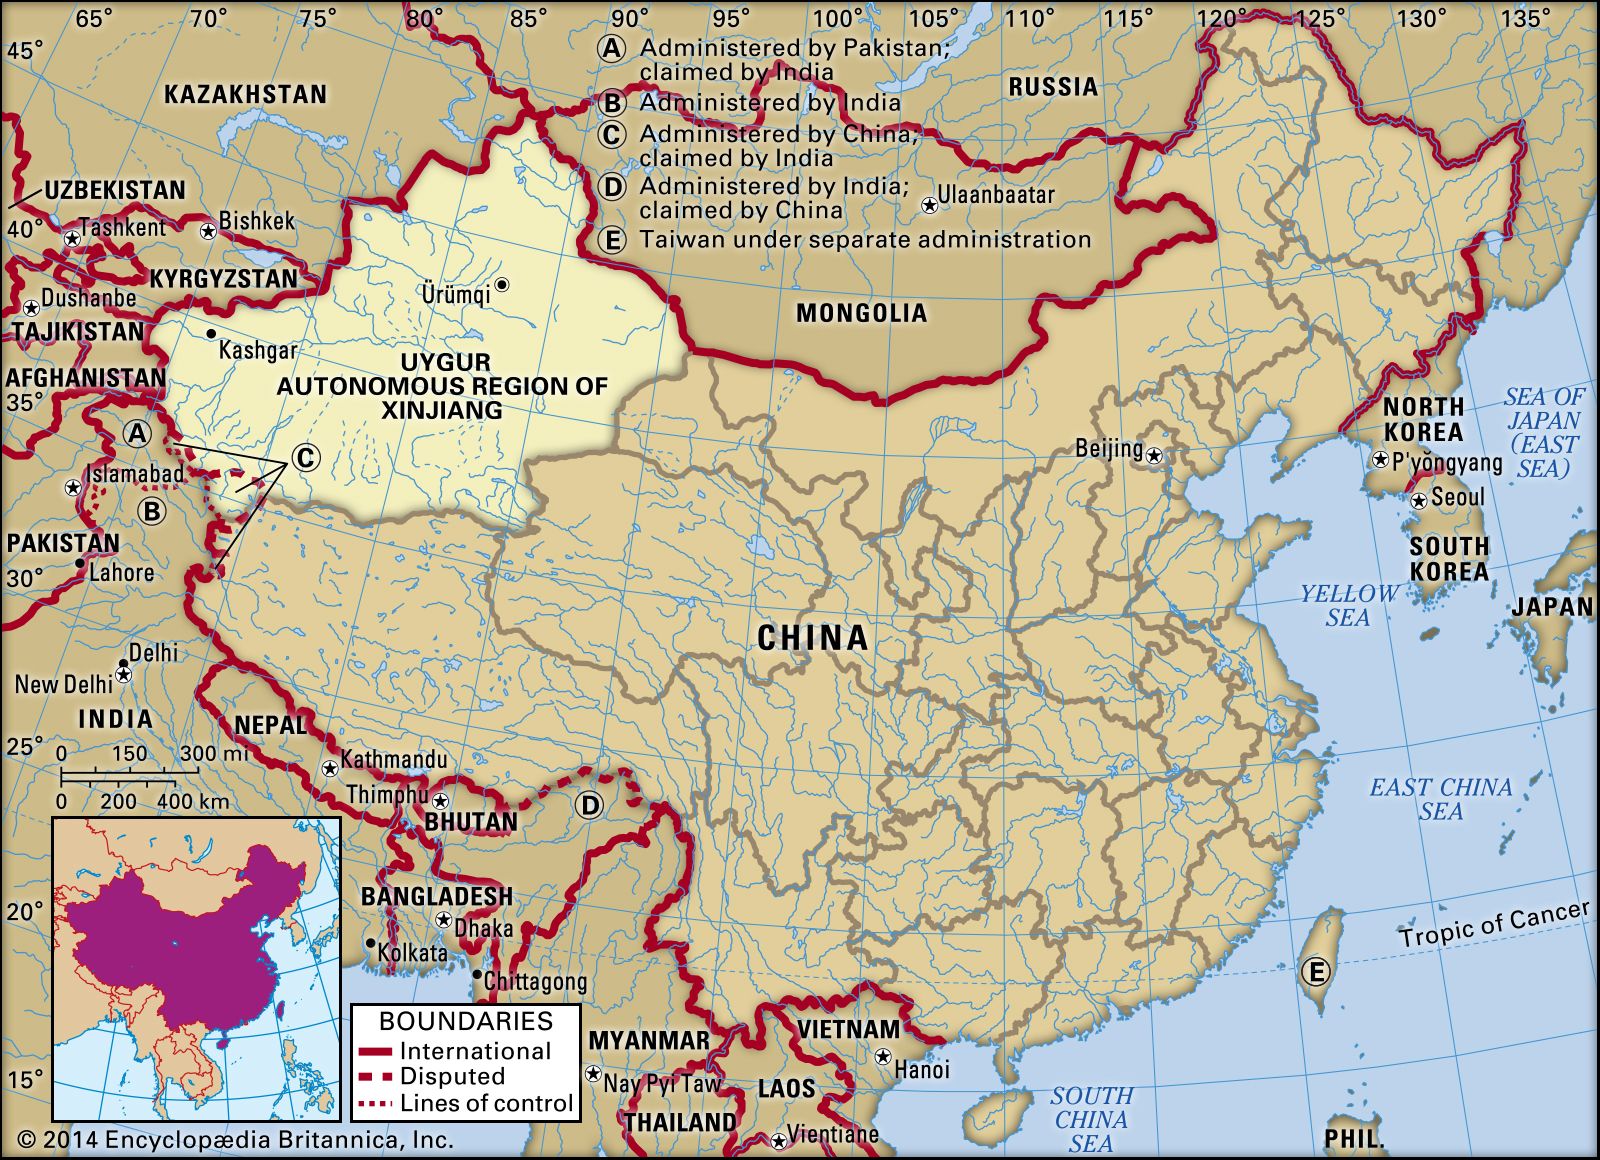 Uygur-Autonomous-Region-of-Xinjiang-China.jpg